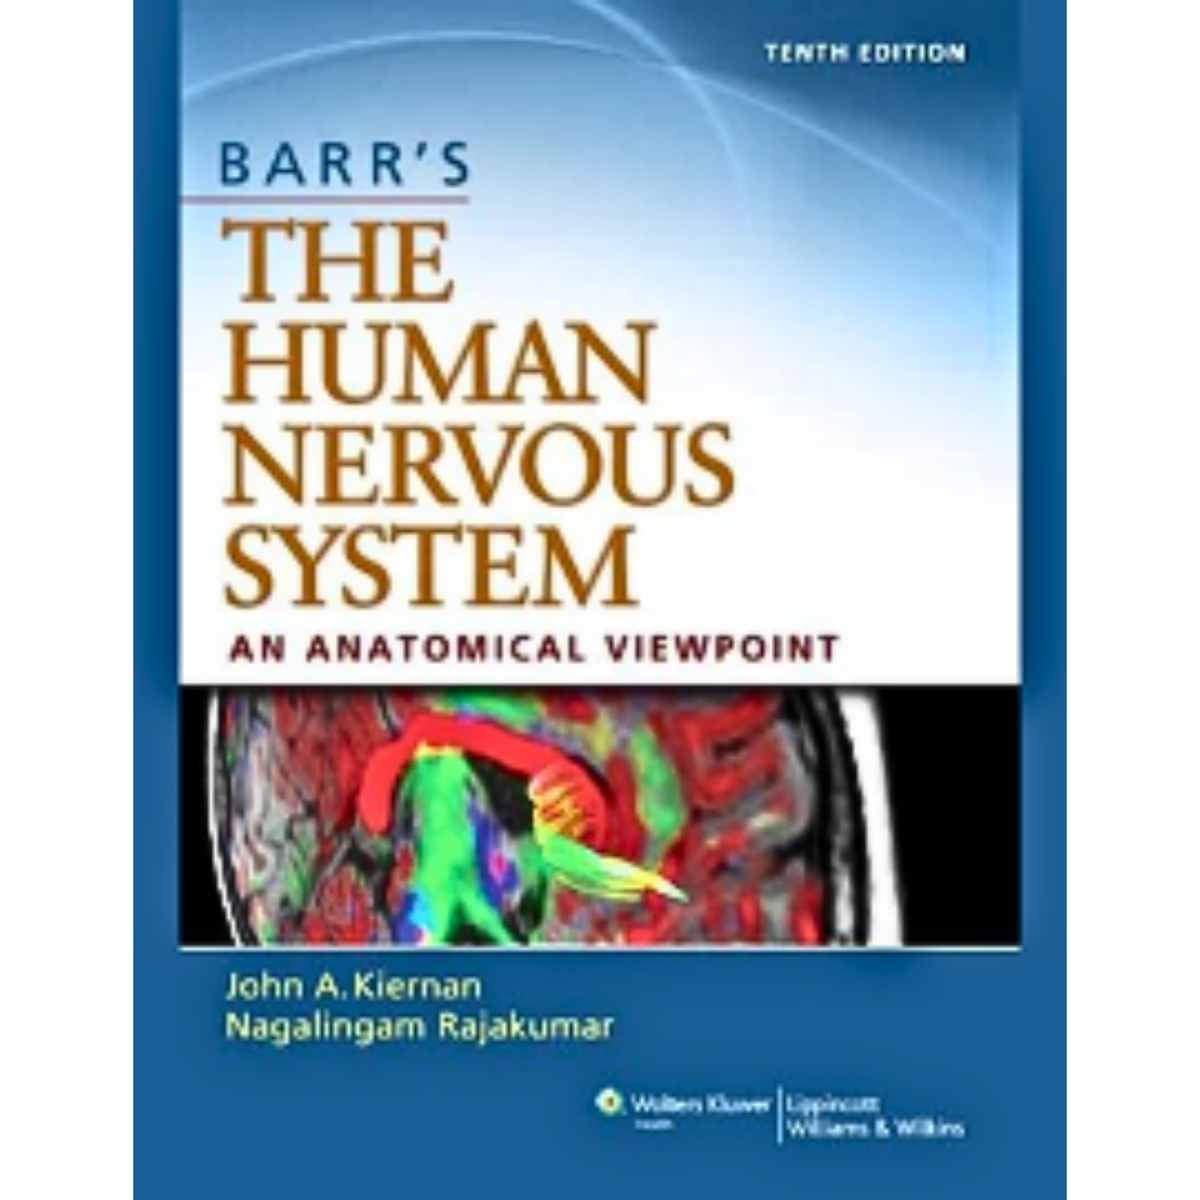 Barr's The Human Nervous System by John A Kiernan